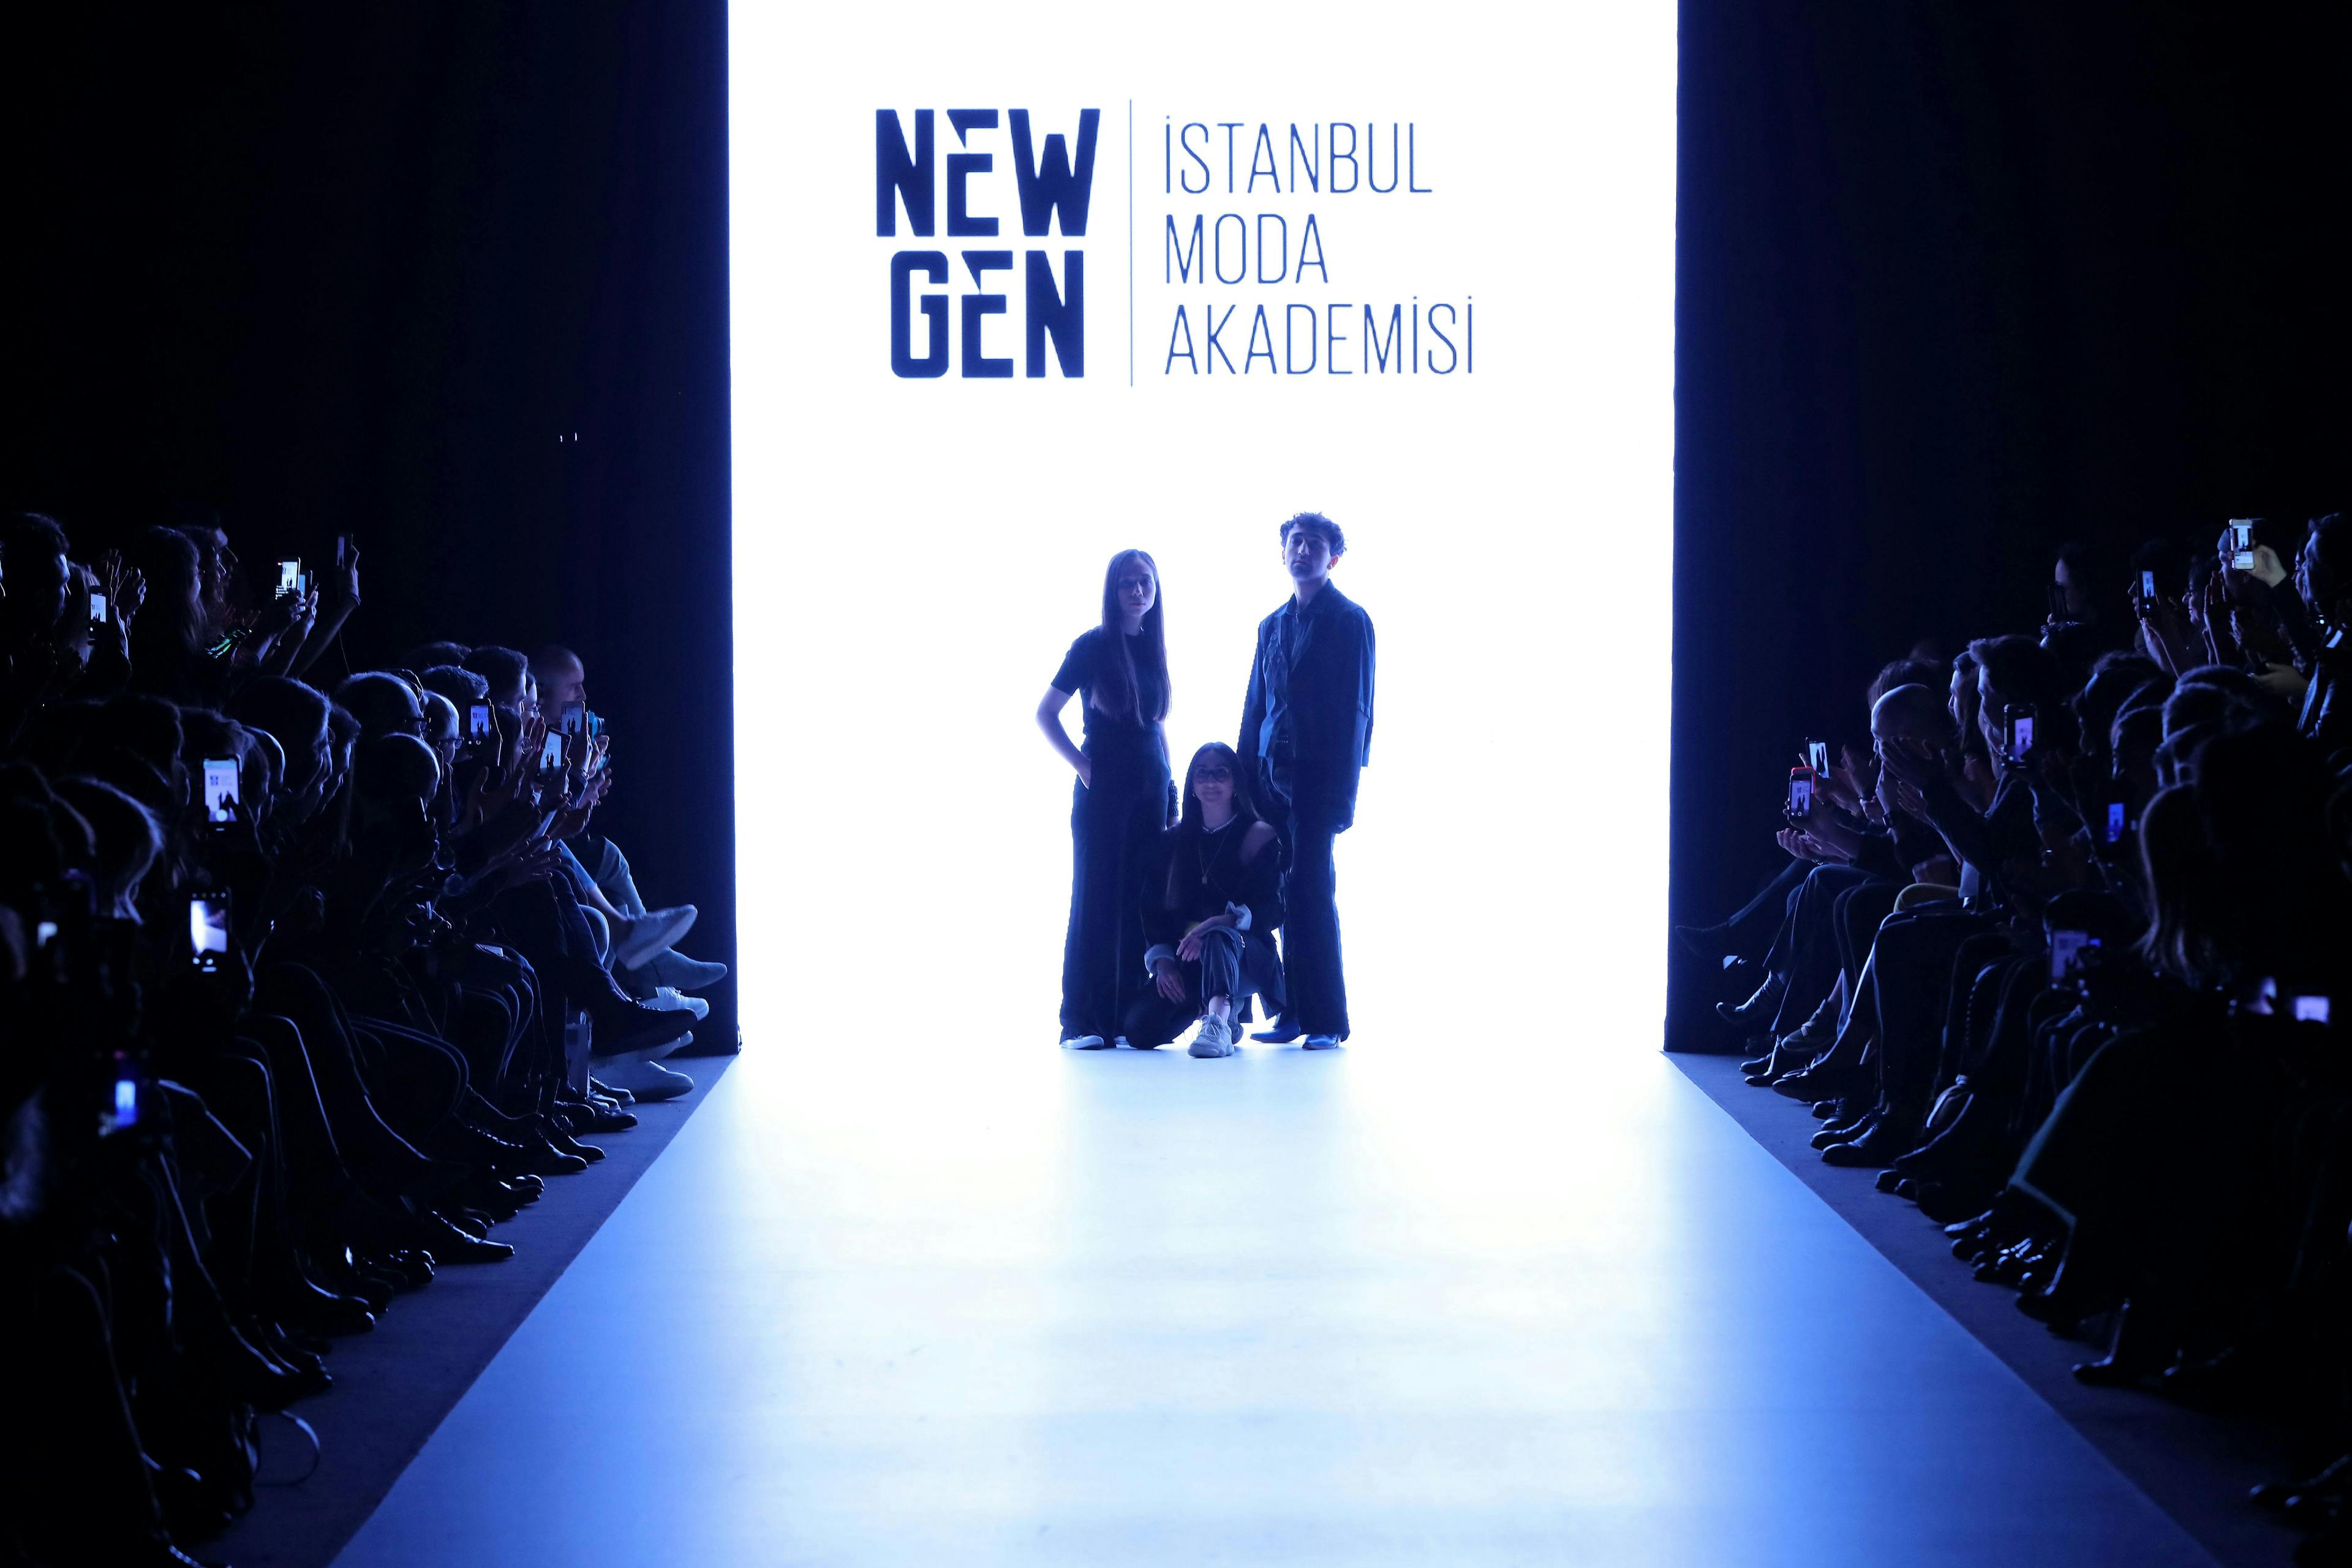 bestof,topix istanbul interior design indoors person human stage lighting crowd sleeve clothing apparel